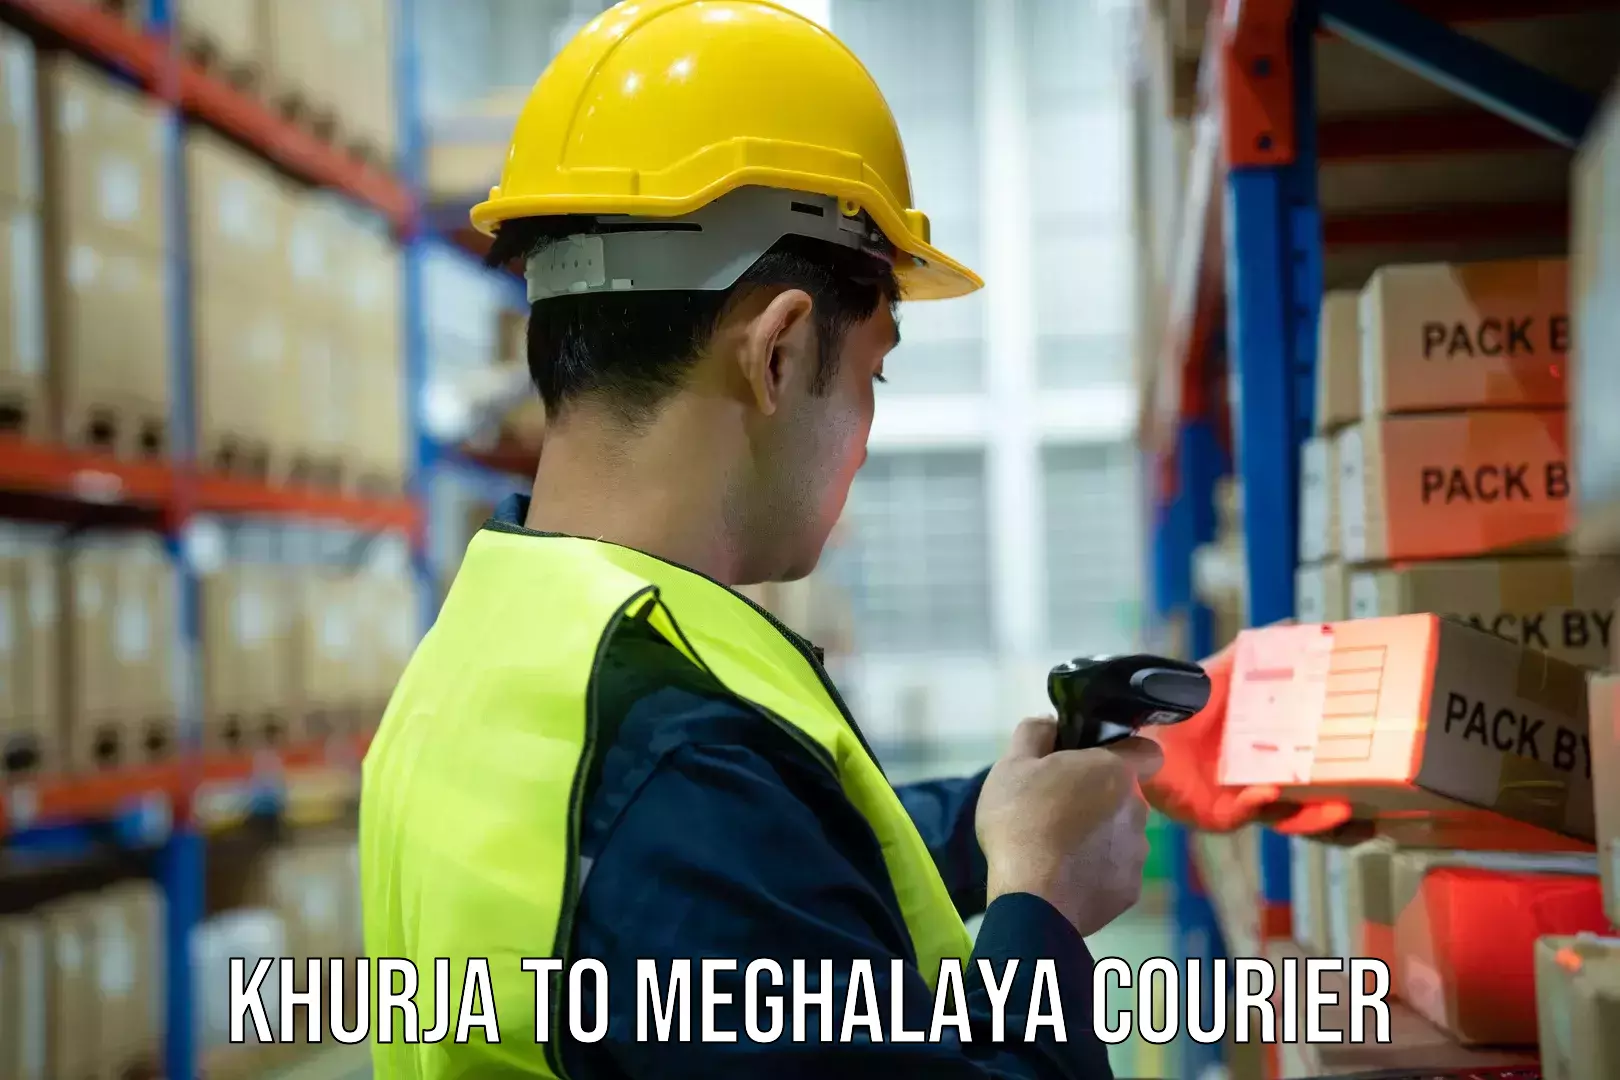 Courier service comparison Khurja to Meghalaya